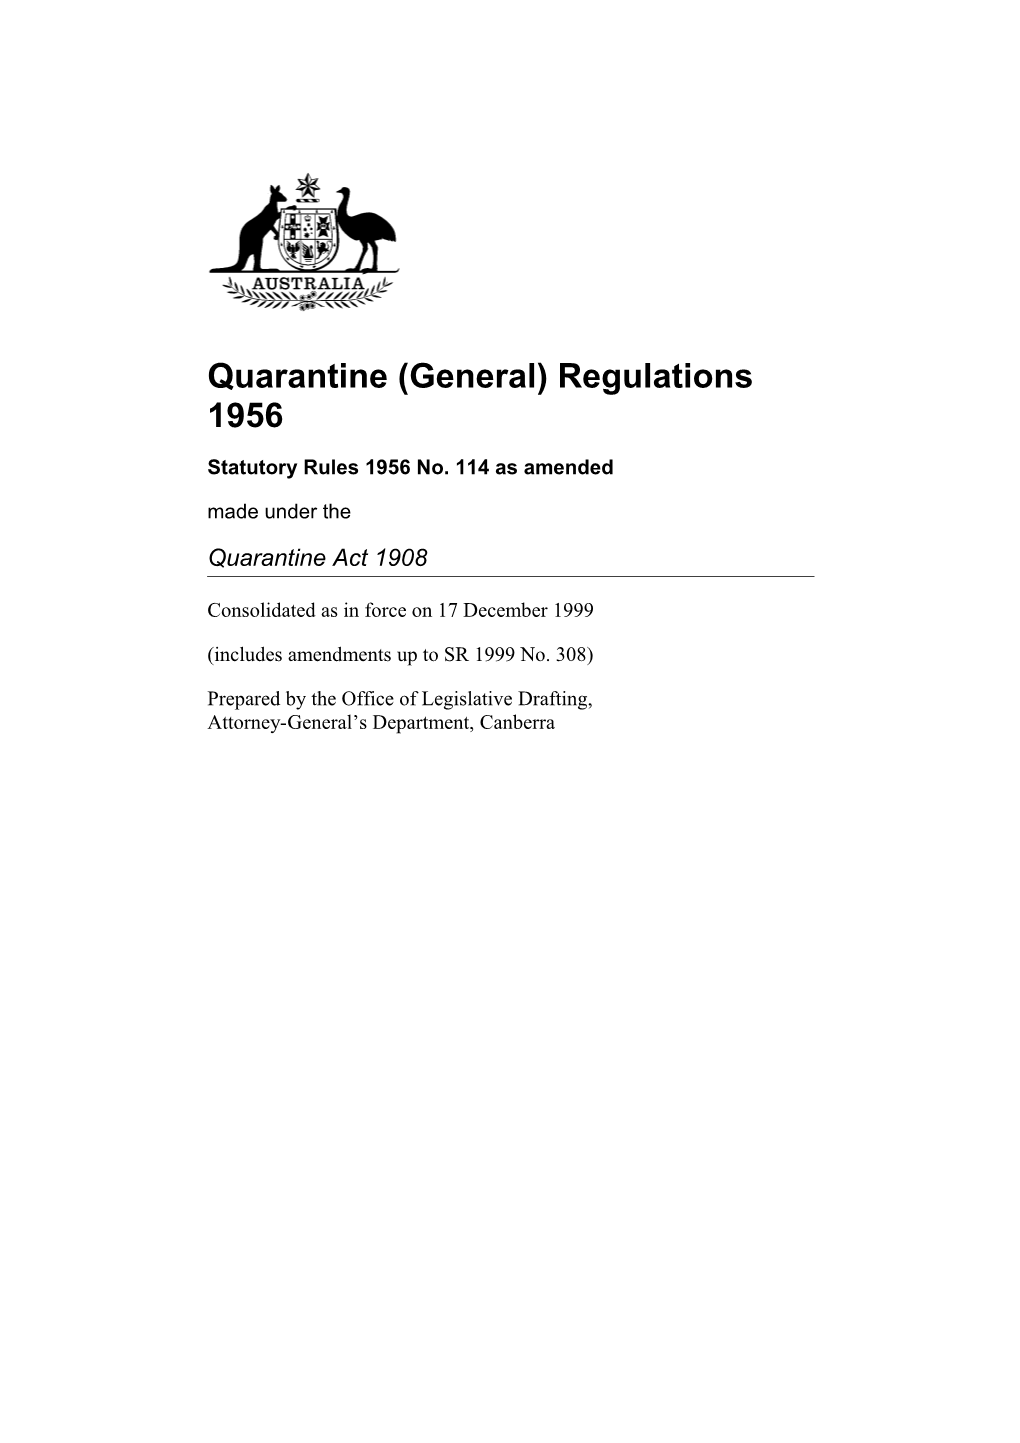 Quarantine (General) Regulations 1956